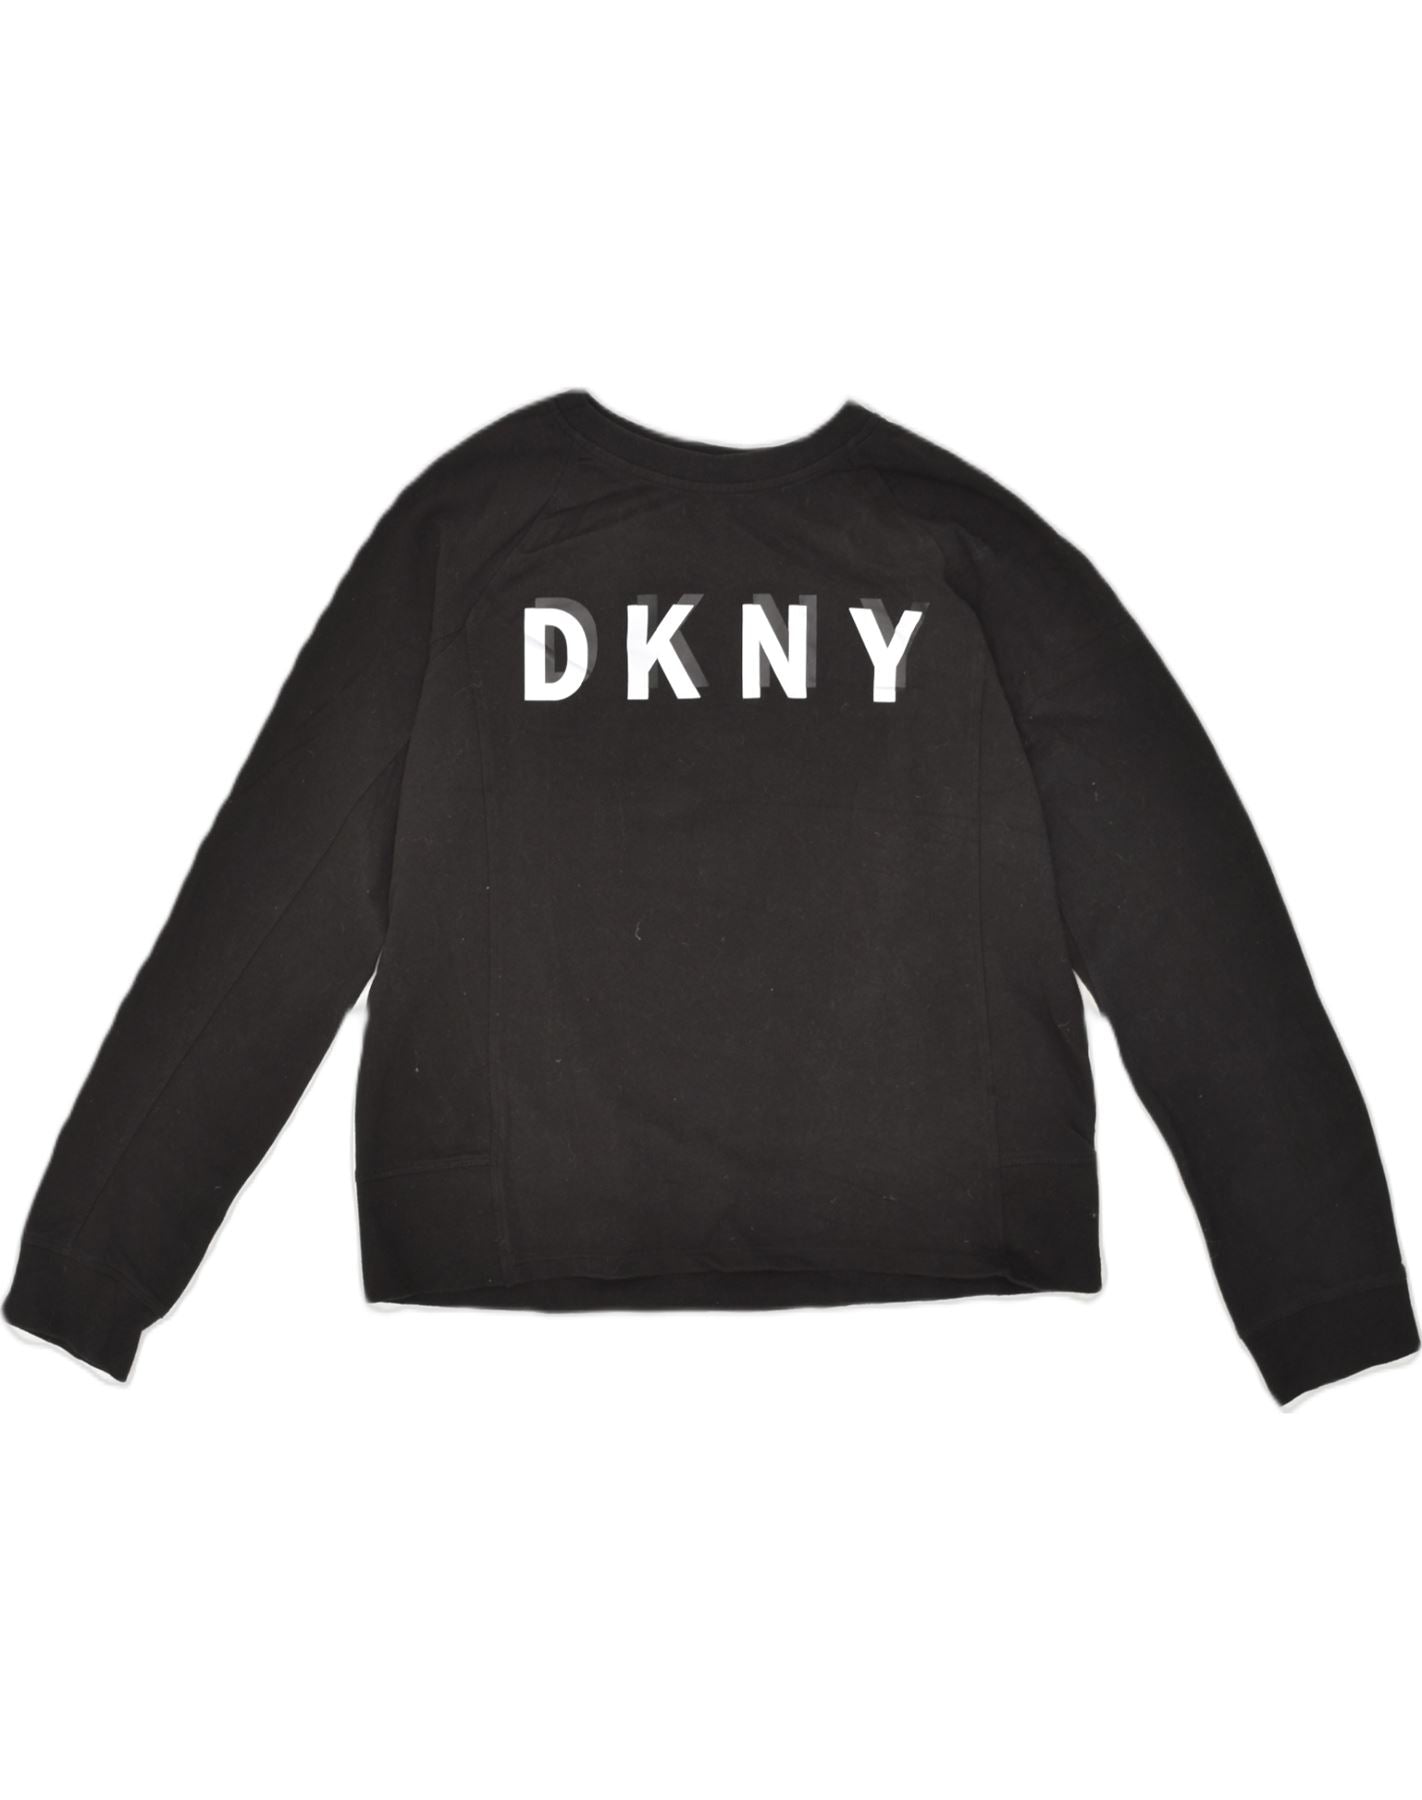 DKNY Shop Womens Sweatshirts & Hoodies